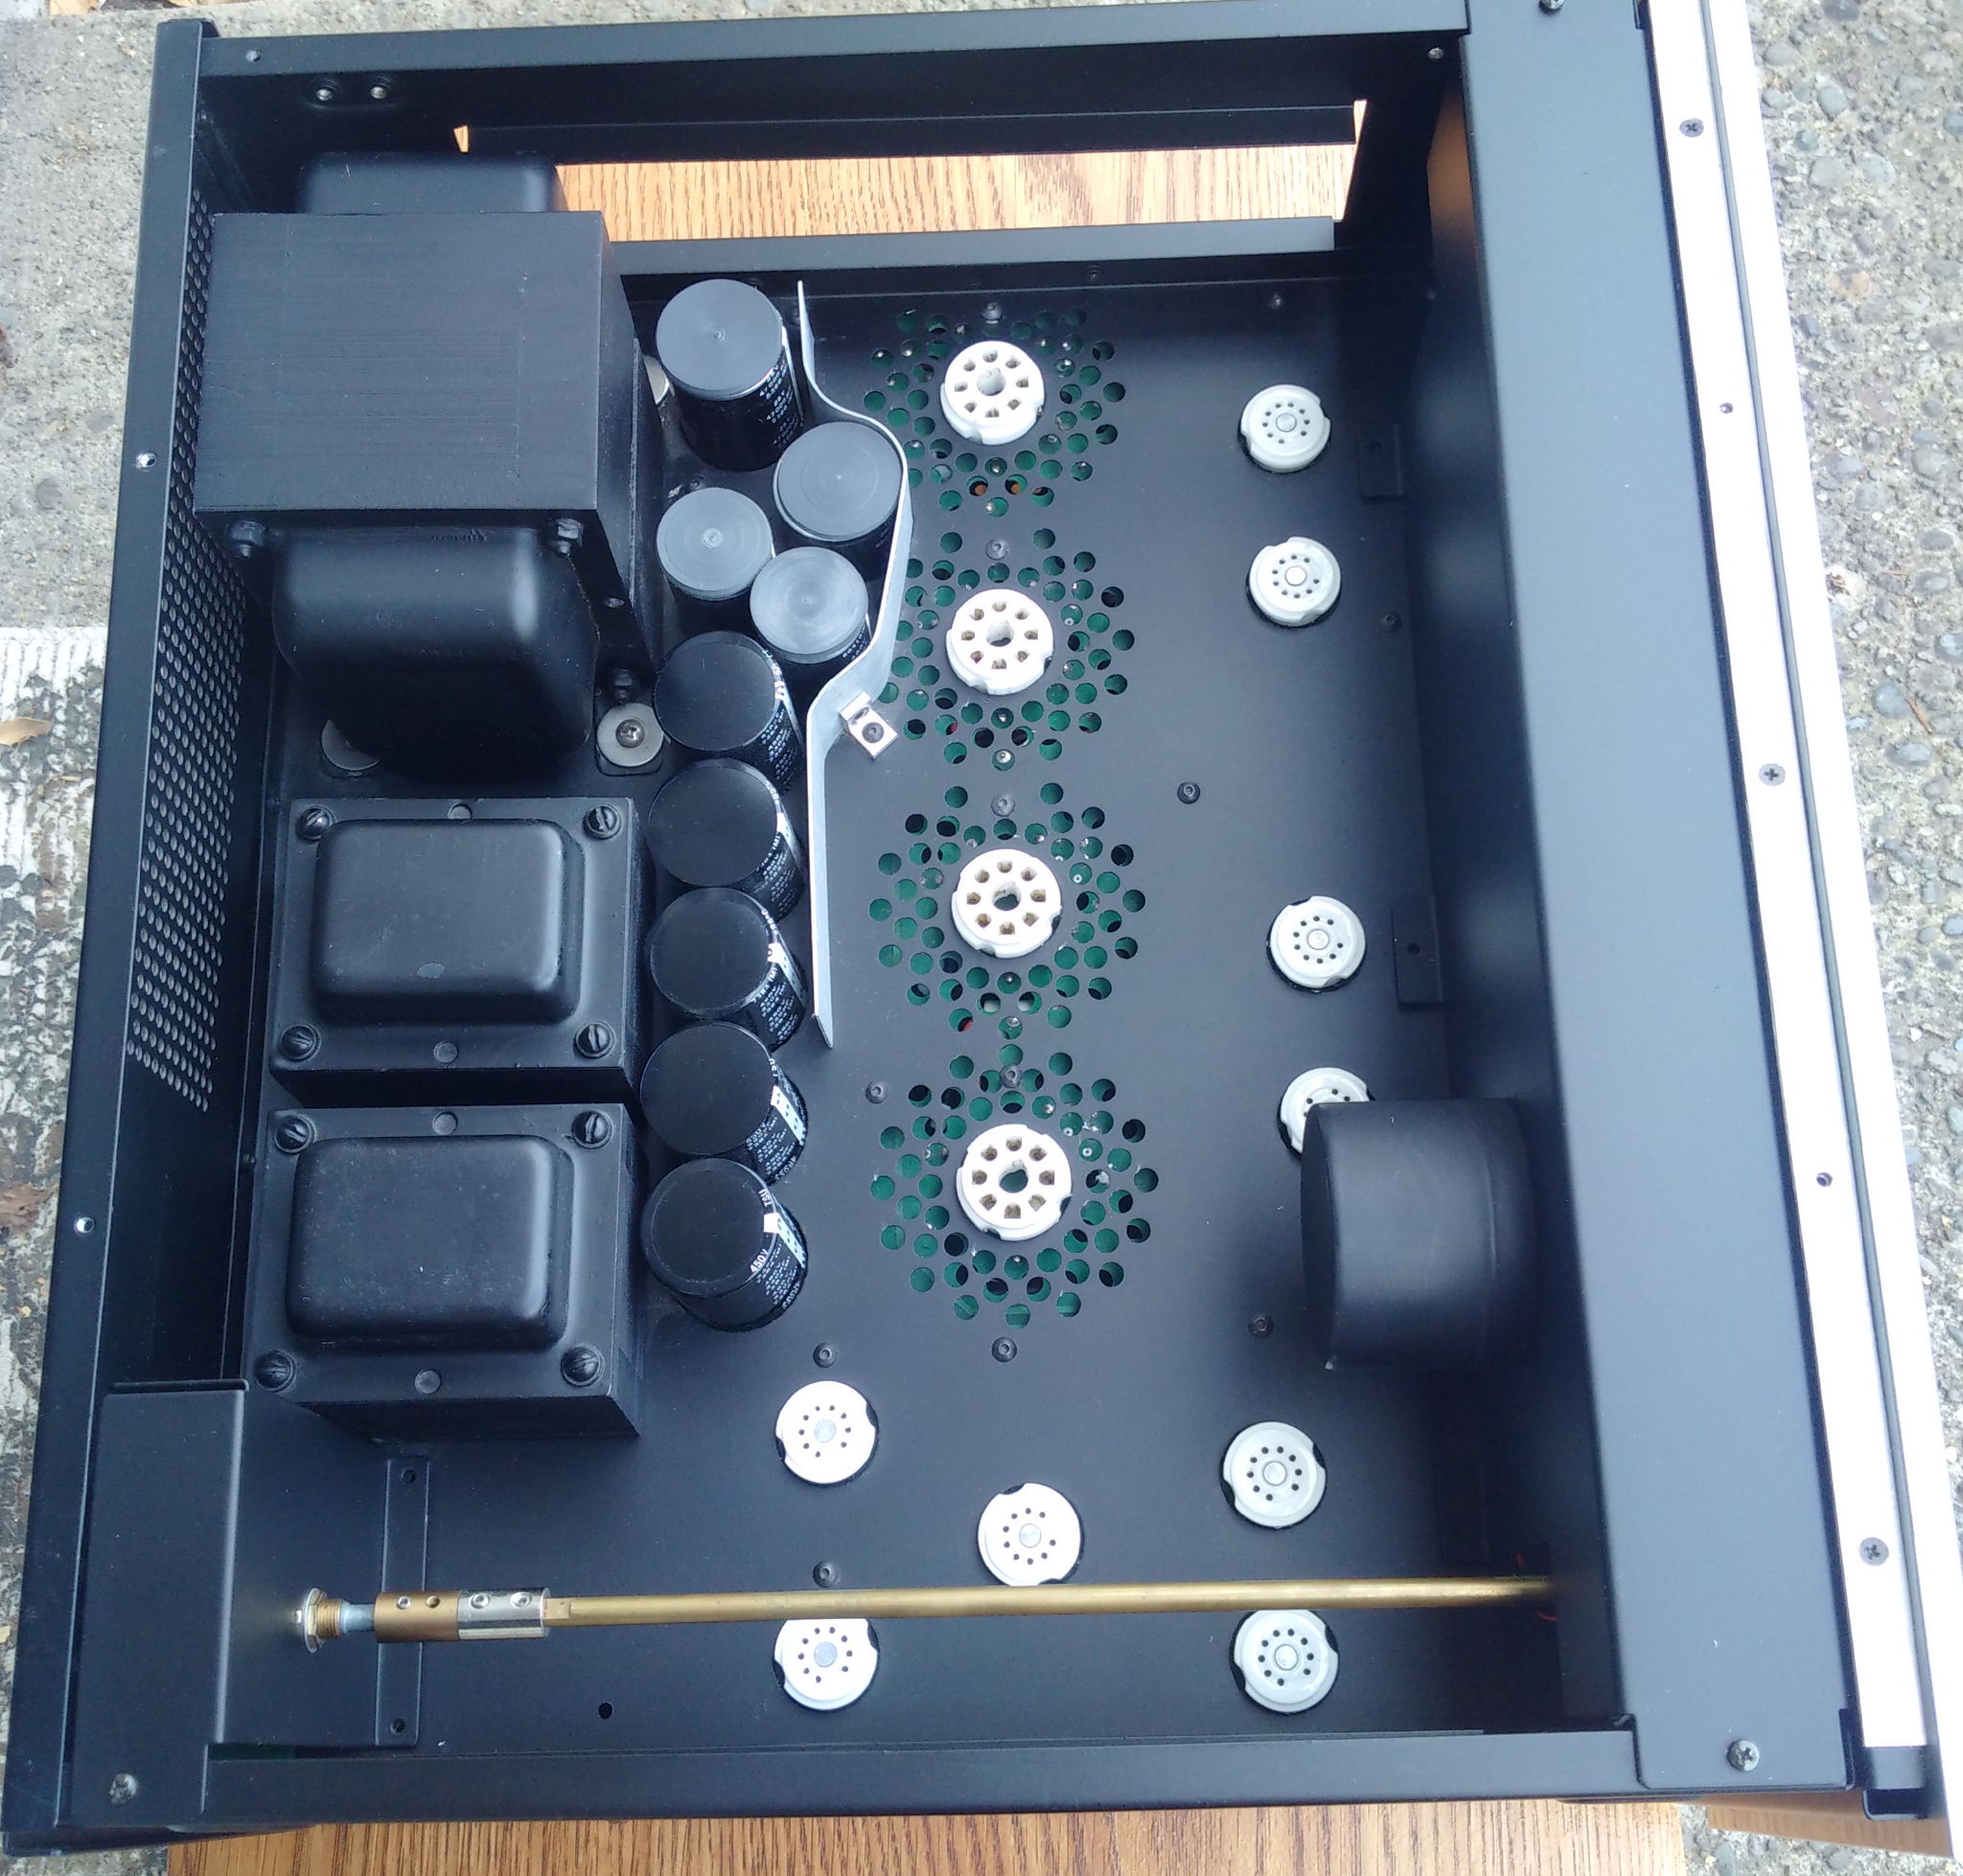 VAC Avatar Super integrated amplifier 2